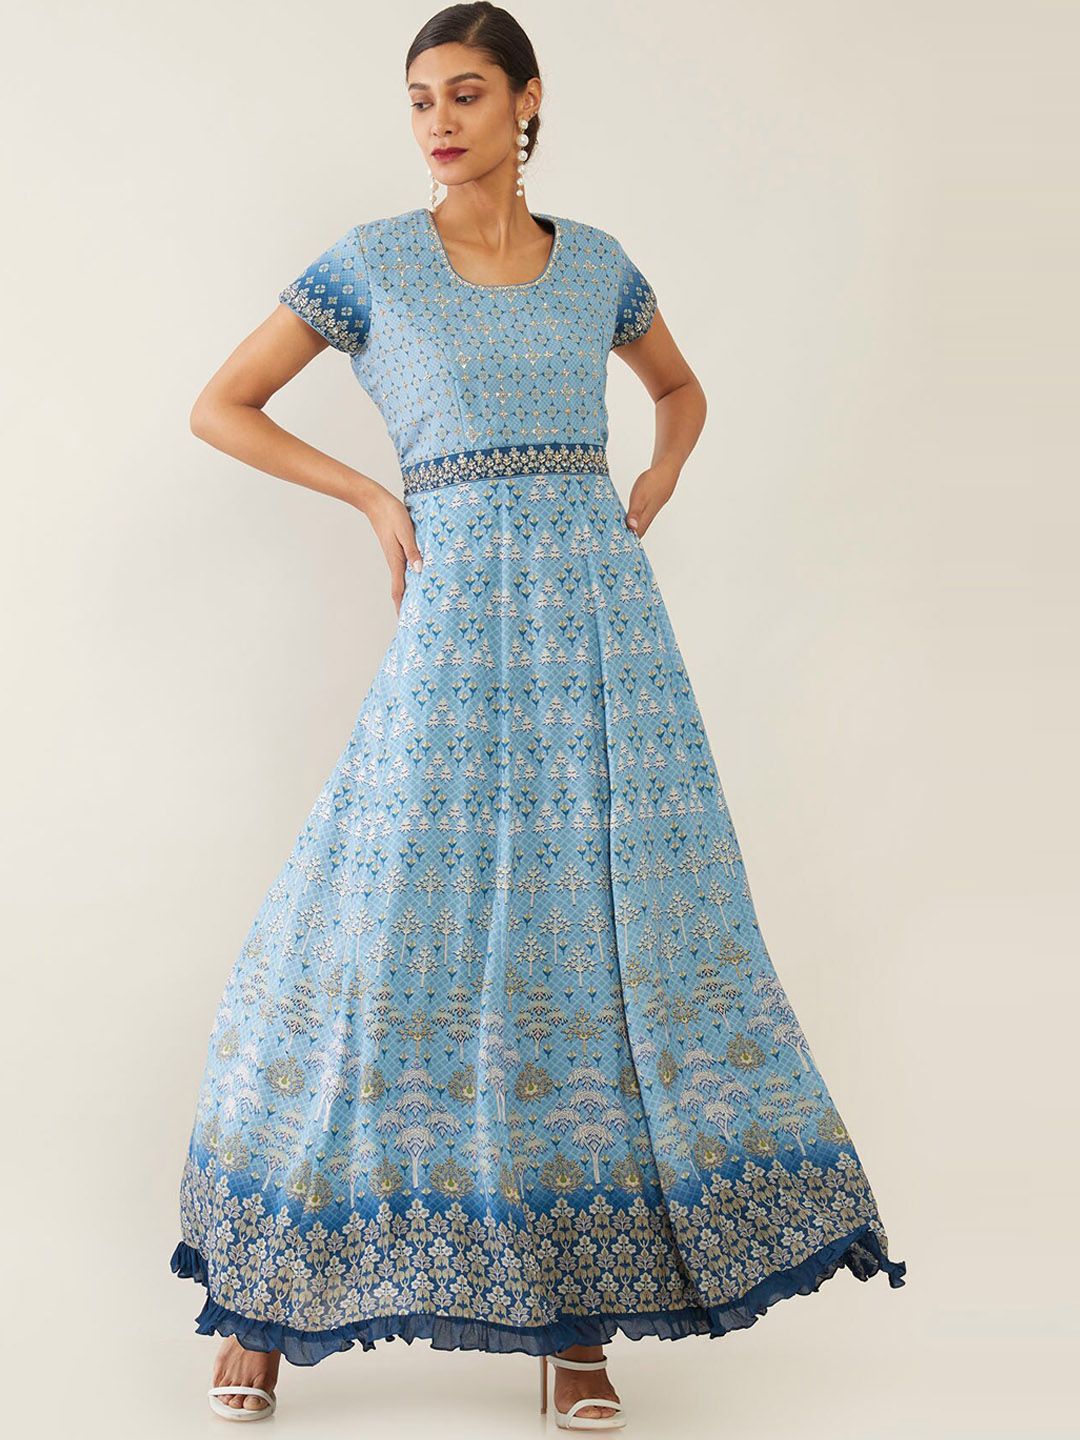 Soch Blue Ethnic Motifs Crepe Ethnic Maxi Dress Price in India